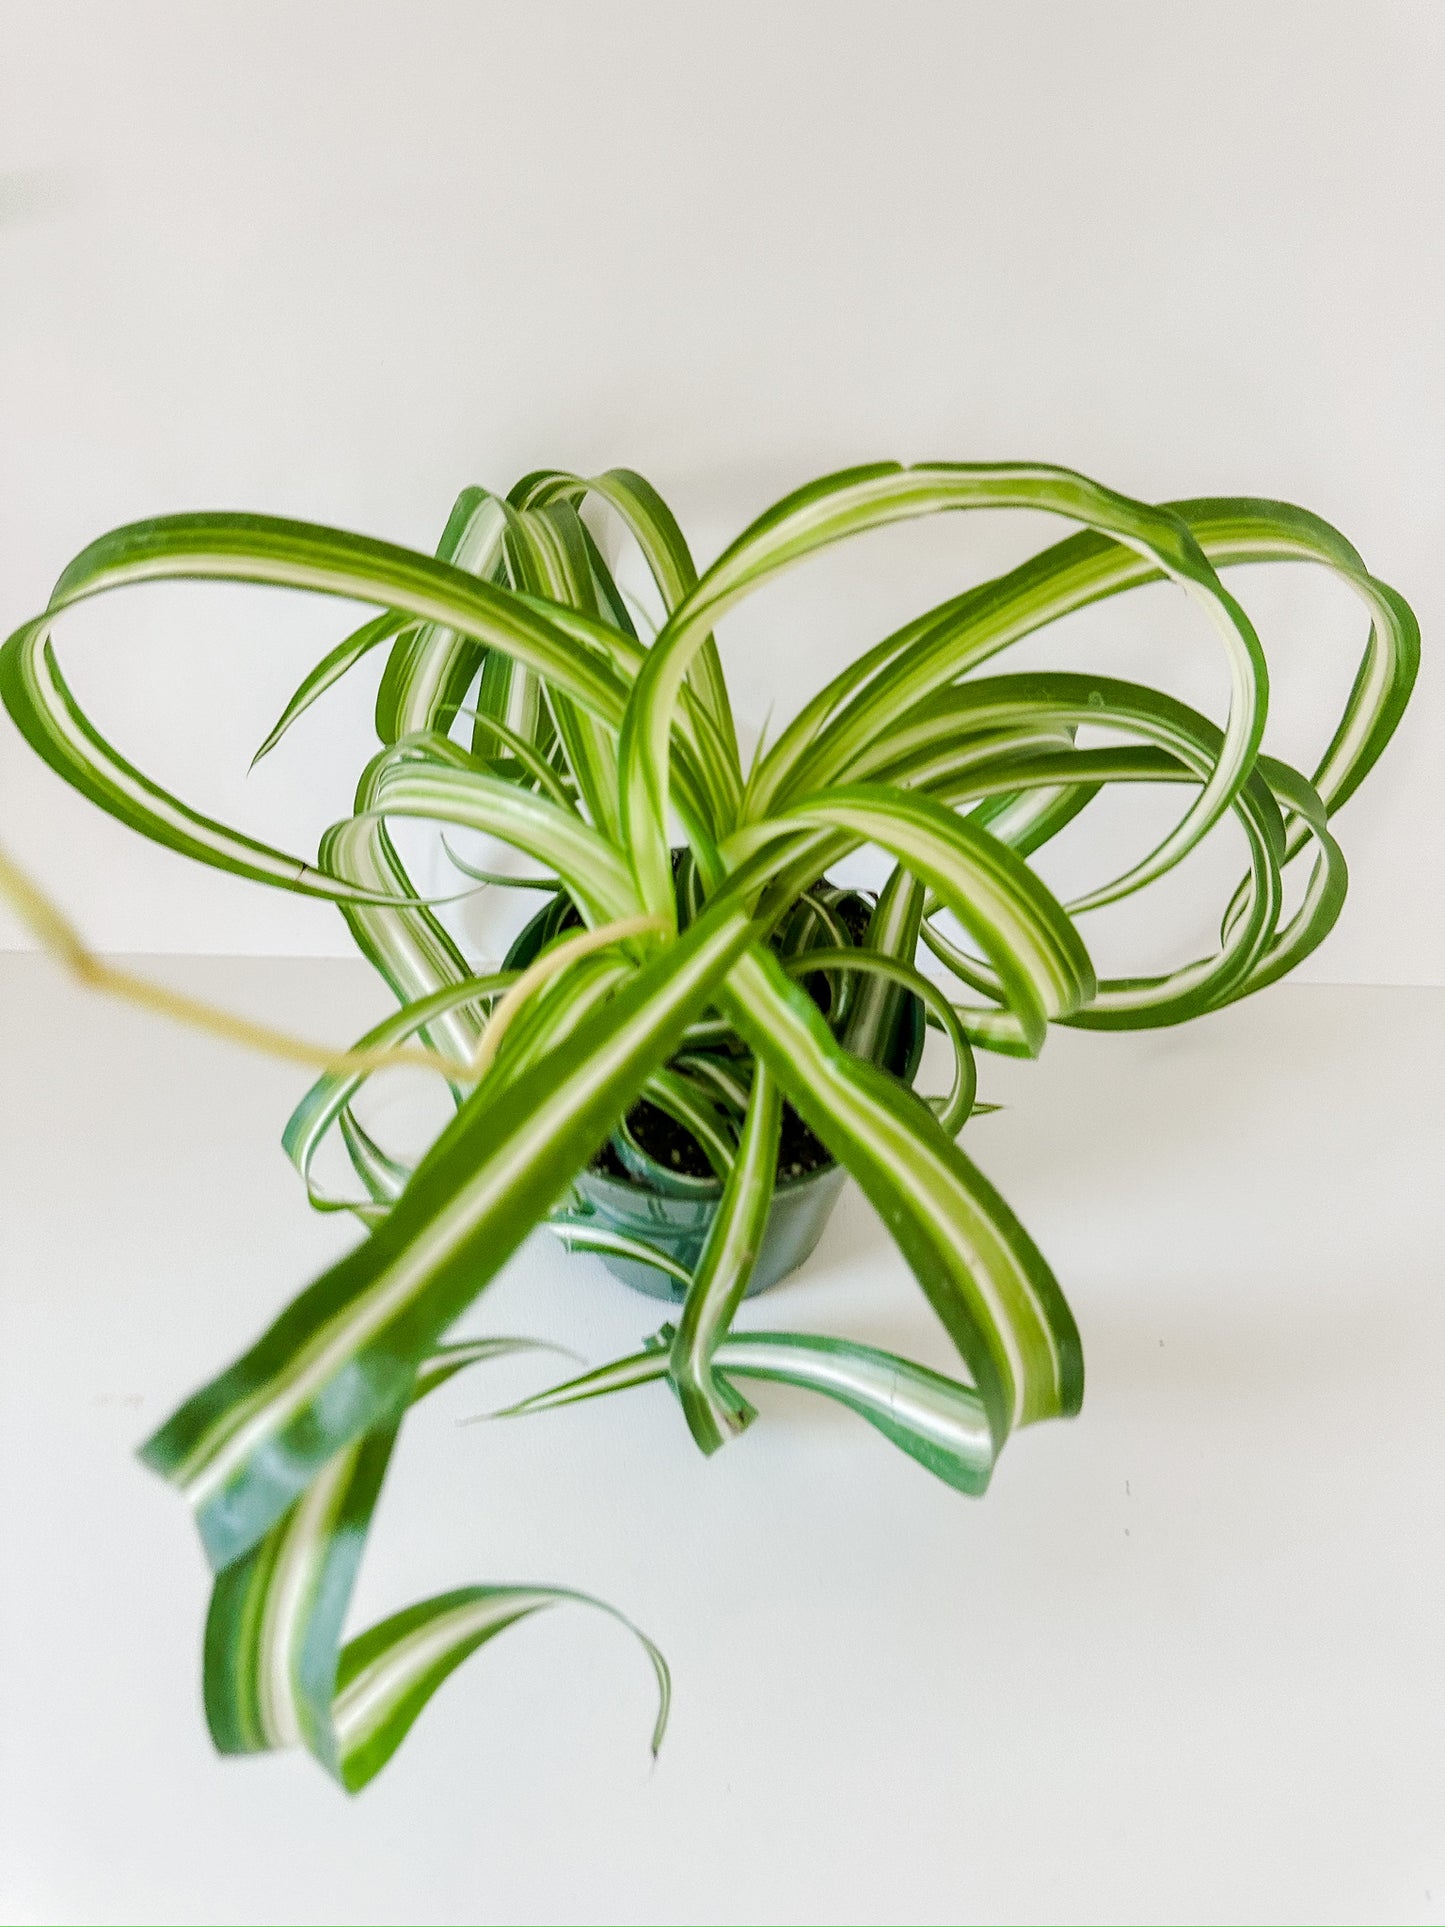 Chlorophytum Spider Plant 'Bonnie'- 🌱  Beginner-Friendly, 🐾 Pet Friendly, Vining - Tropical Houseplant